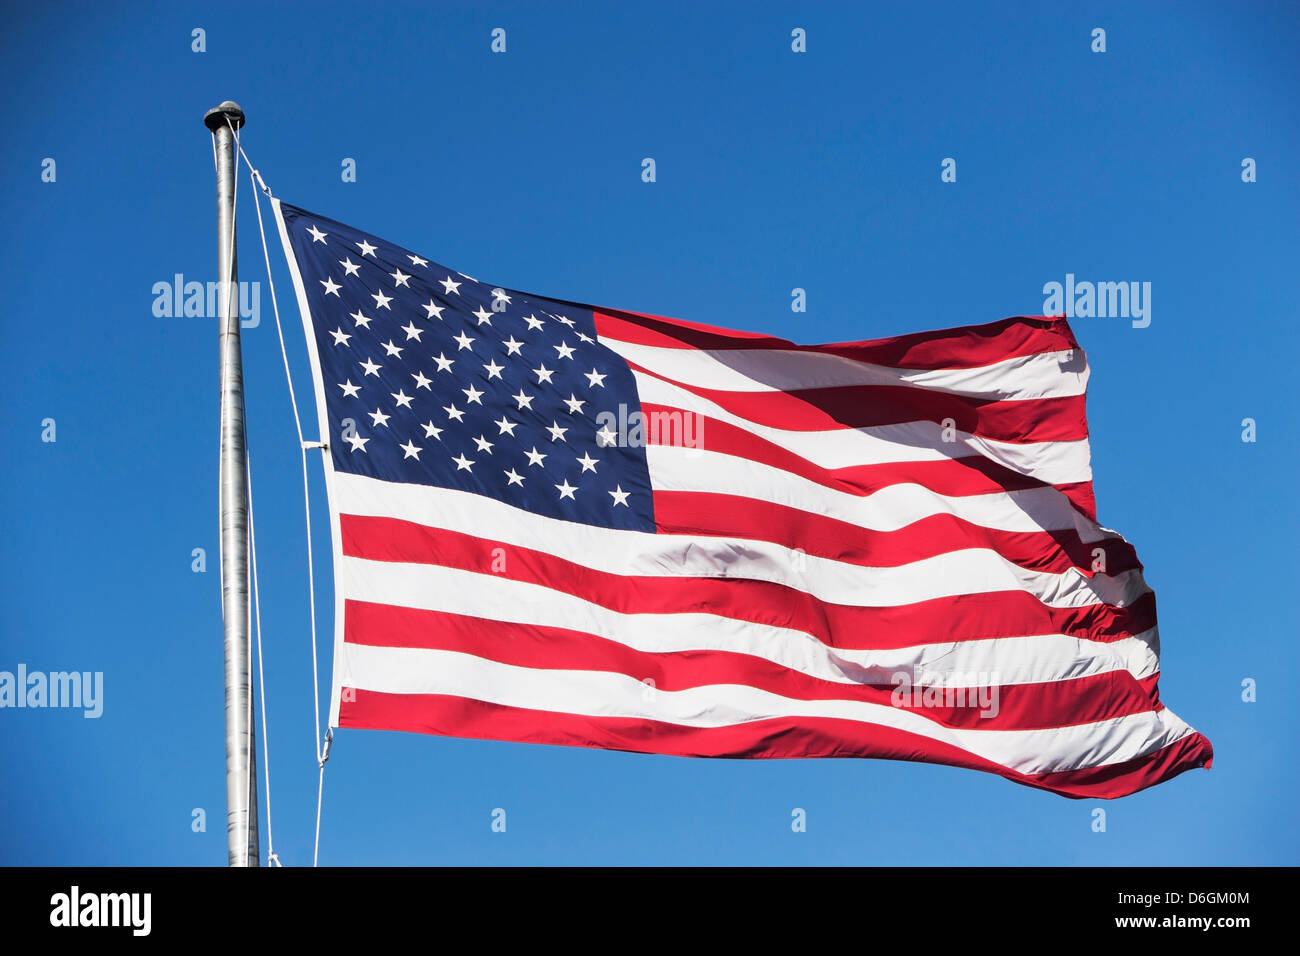 American flag waving in sky Stock Photo